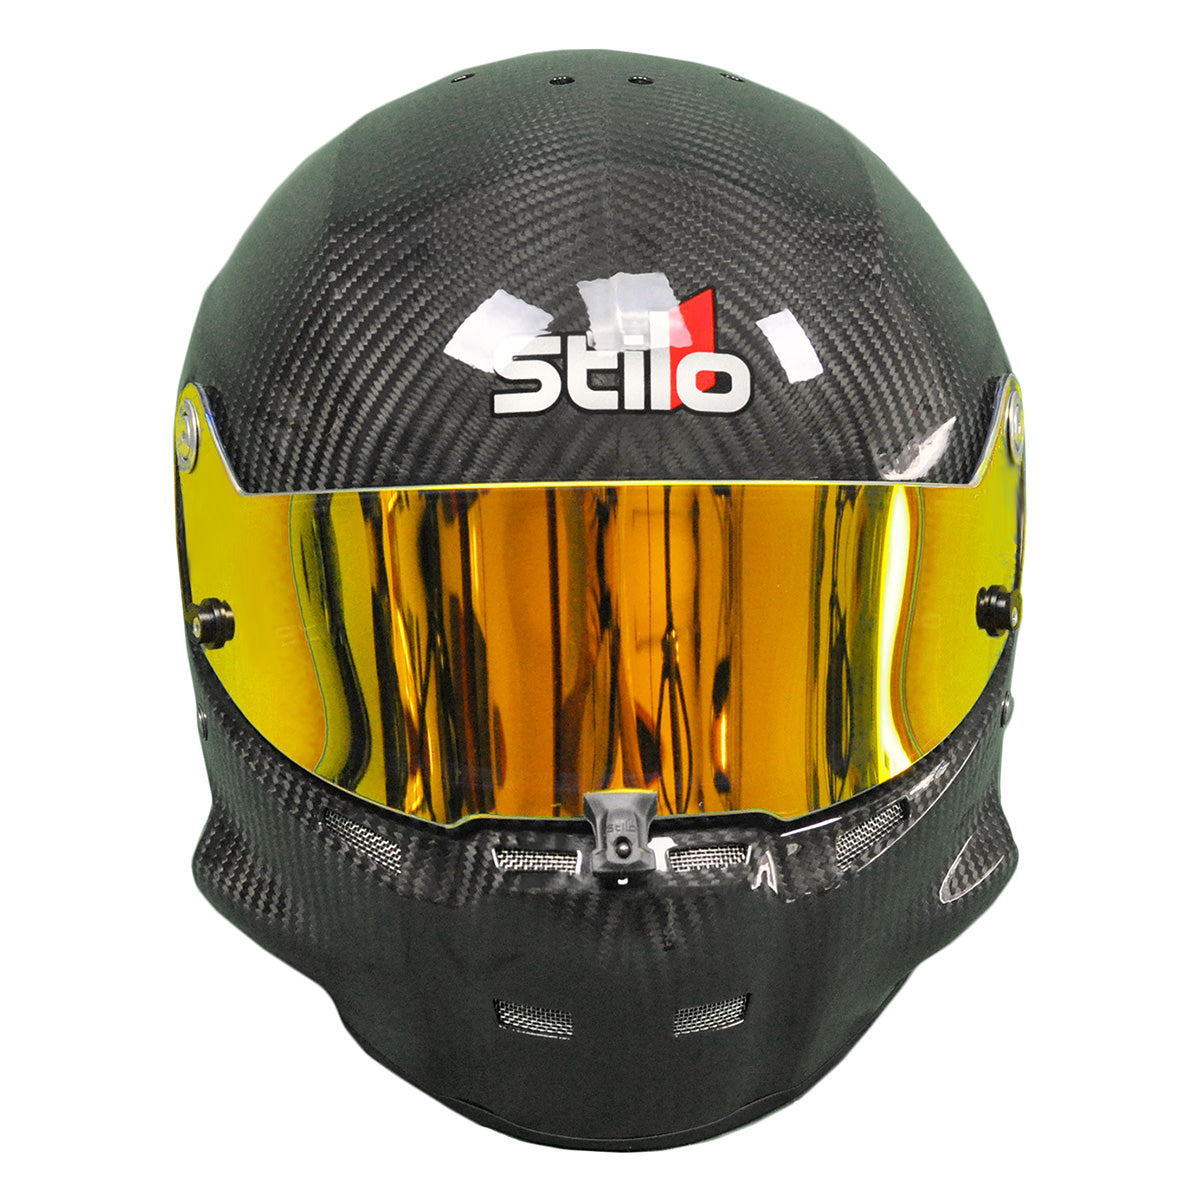 Iridium Yellow Stilo ST5 and ST5.1 auto racing helmet visor shields in stock now.